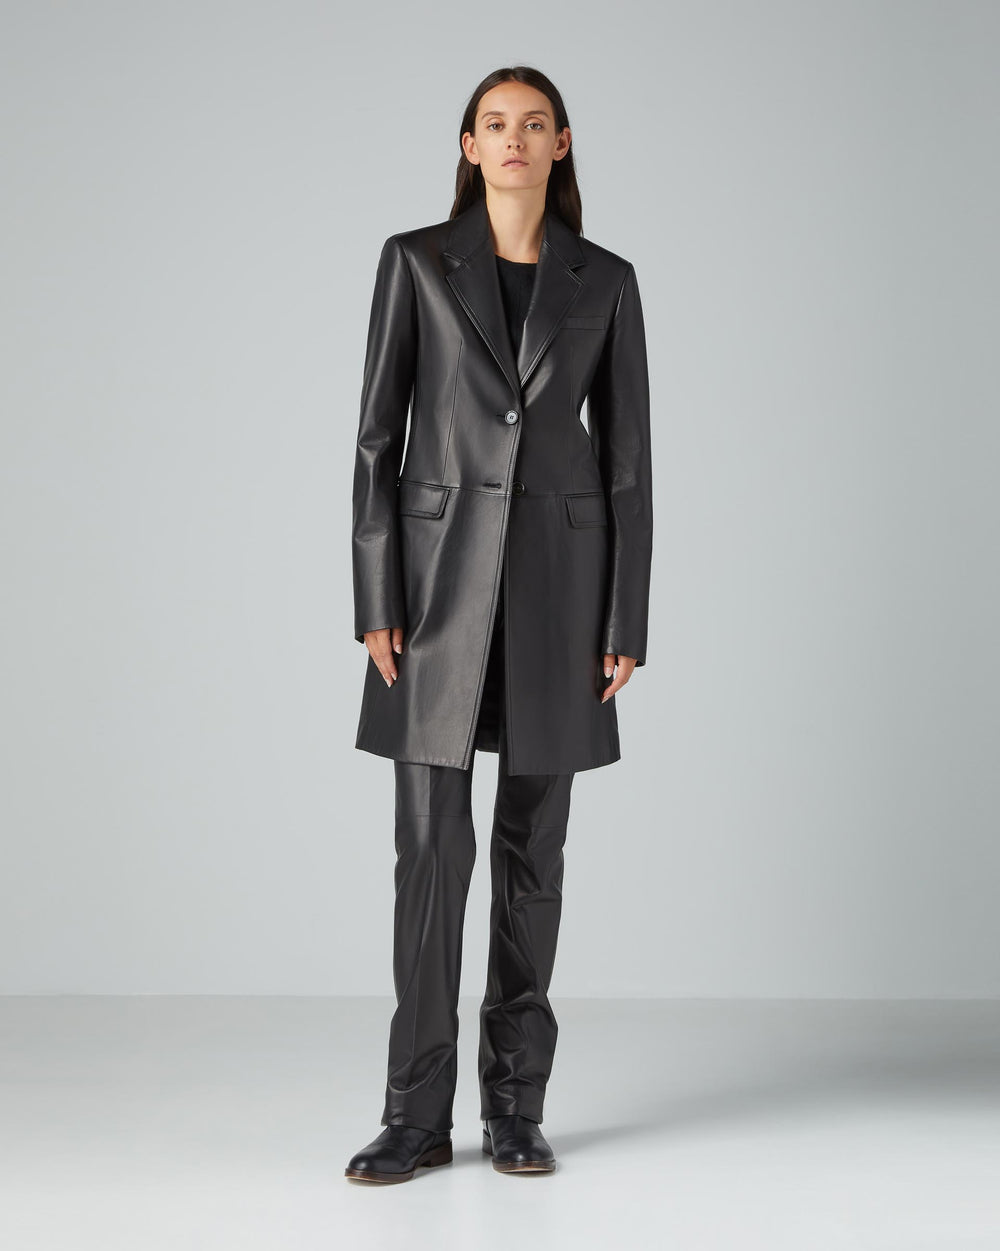 Stephanie Coat in Nappa Leather, Black